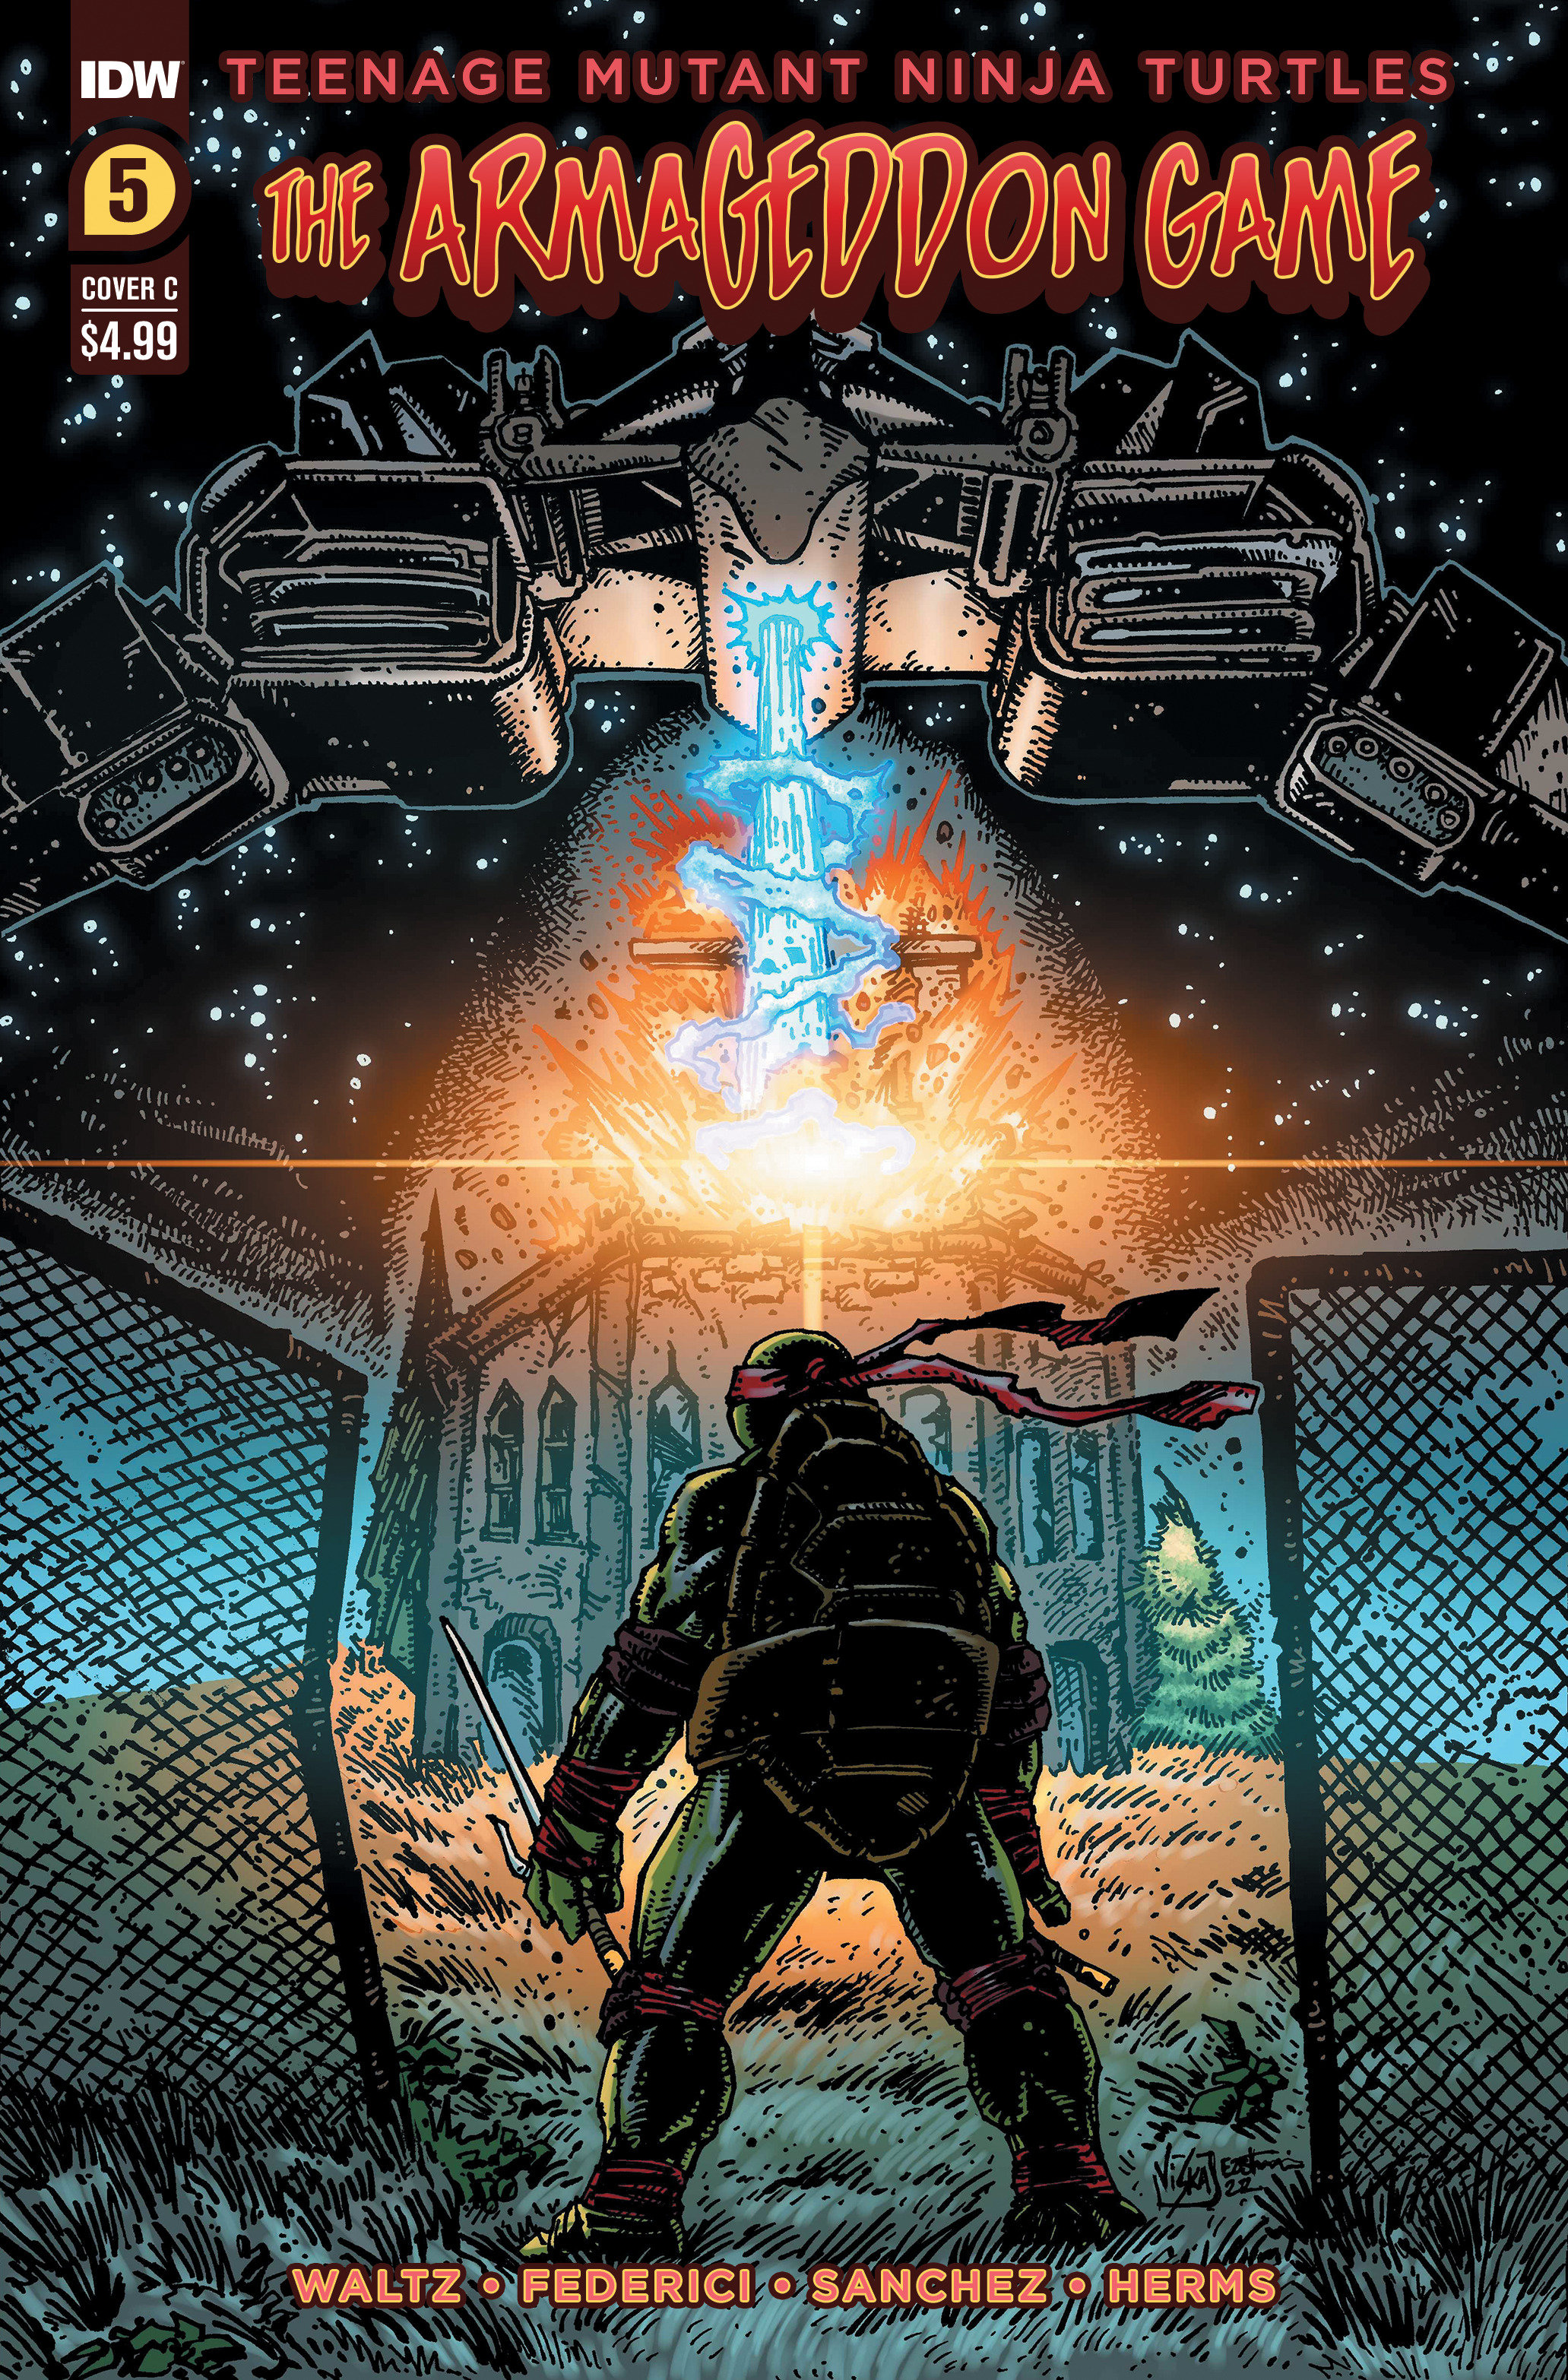 Teenage Mutant Ninja Turtles The Armageddon Game #5 Cover C Eastman